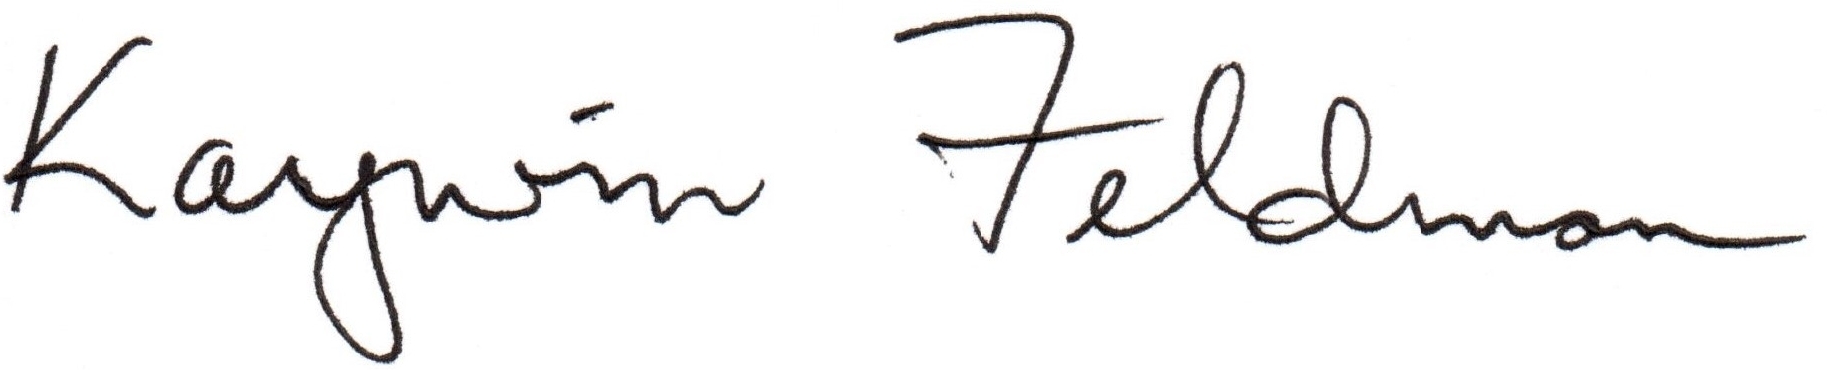 Signature of Kaywin Feldman